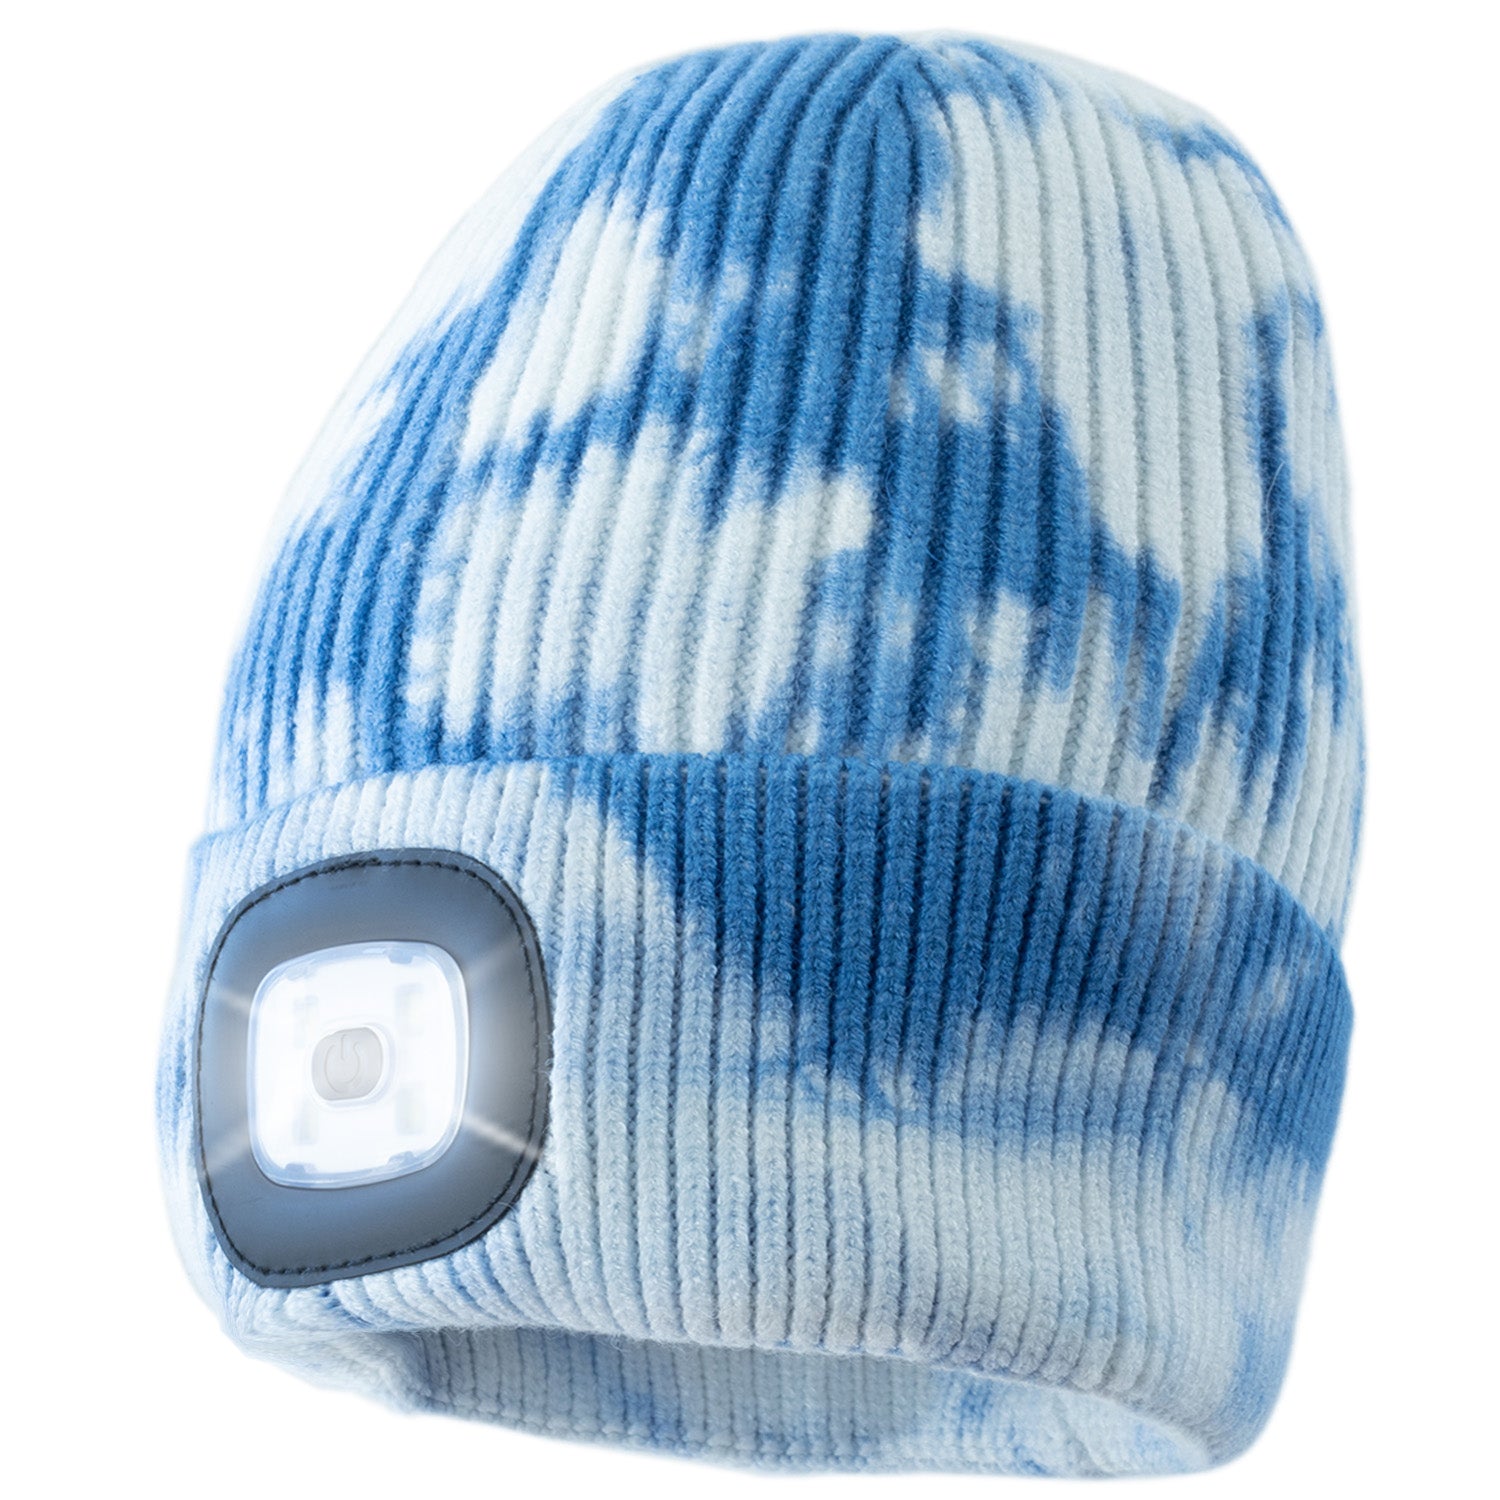 Headlightz® Beanie - Knit – Tie Innovation - Roq Blue Dye